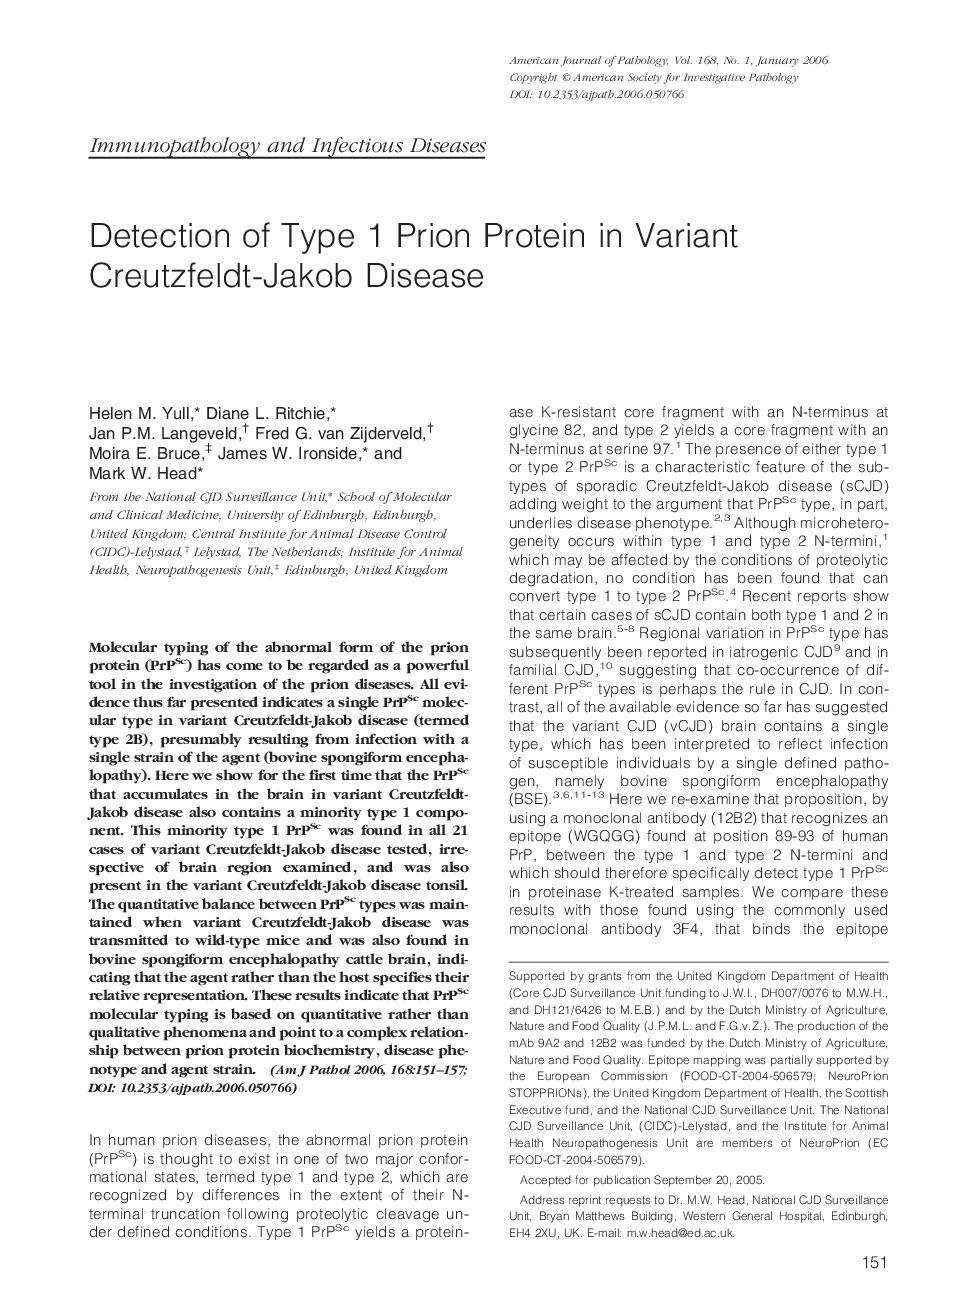 Detection of Type 1 Prion Protein in Variant Creutzfeldt-Jakob Disease